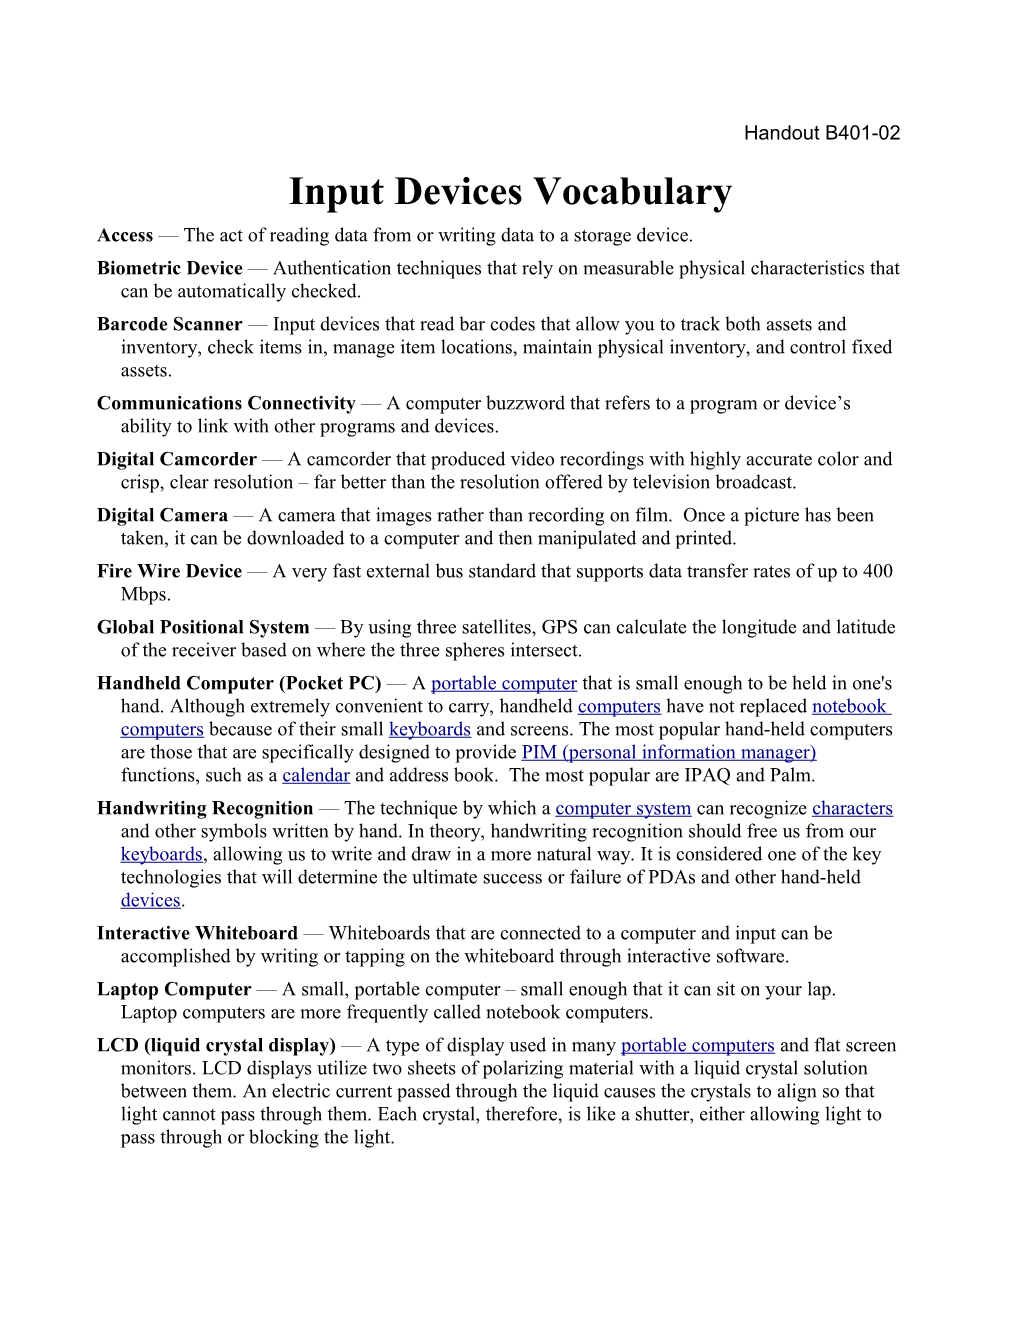 Input Devices Vocabulary